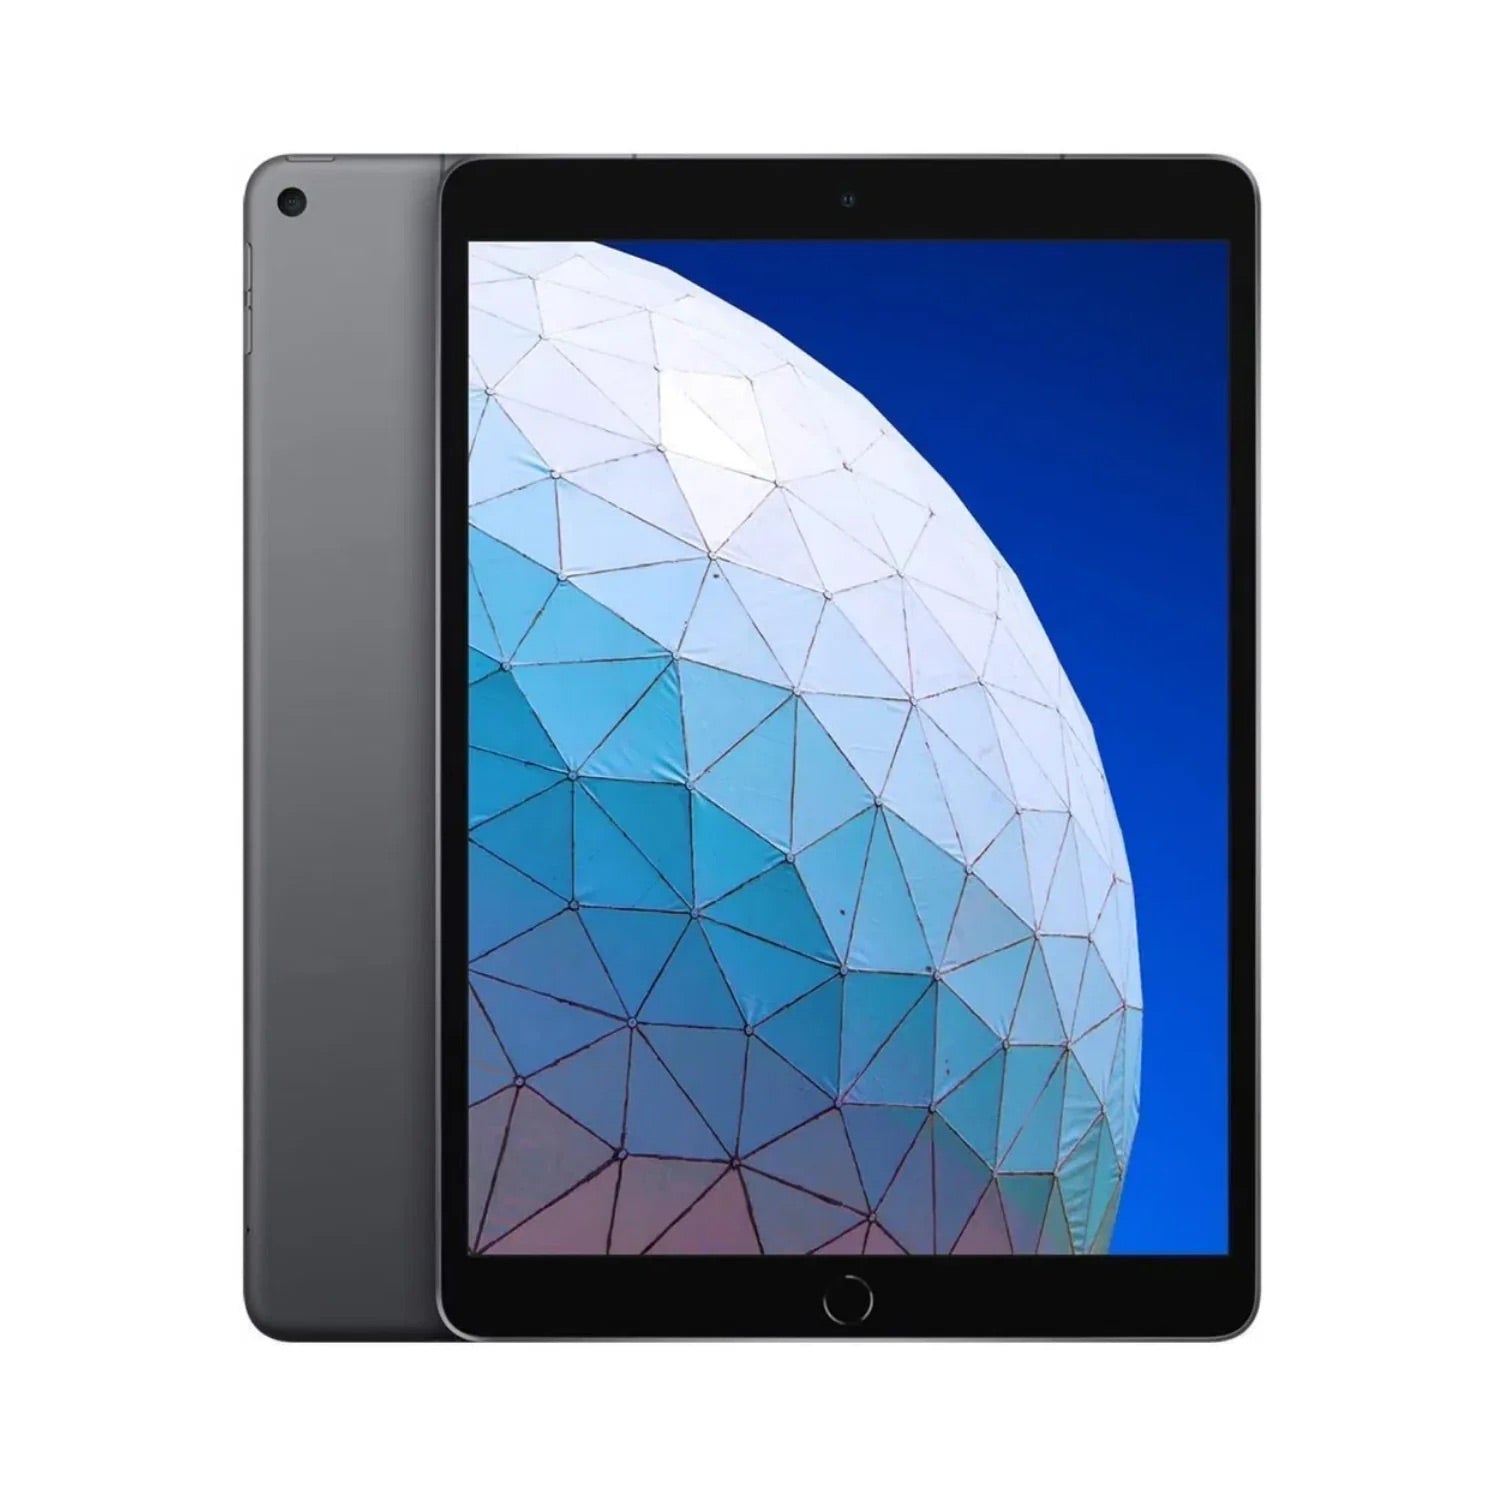 Pack <tc>Dell</tc>  OptiPlex 3020 MT (1 pc) + iPad Air (2 pcs)